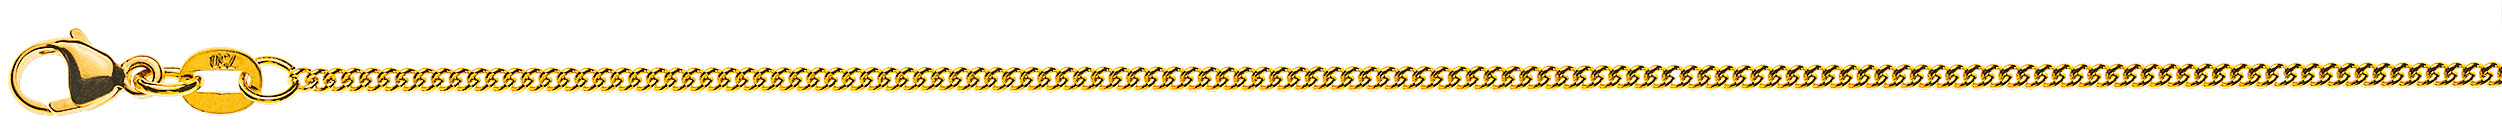 AURONOS Prestige Necklace yellow gold 18K round curb chain 42cm 1.6mm